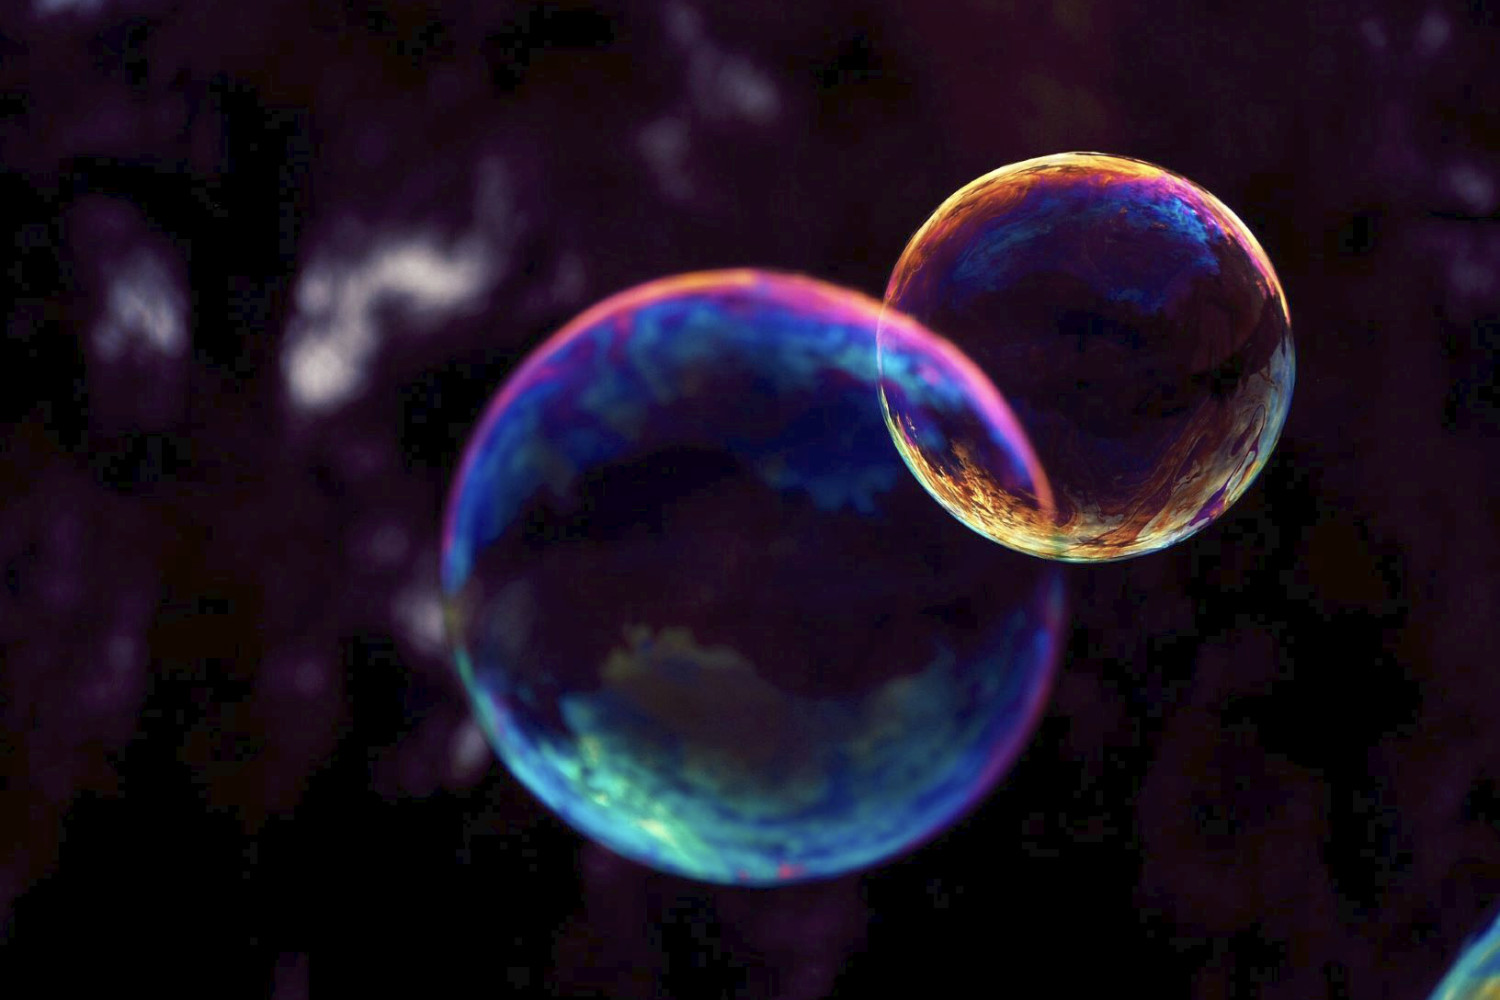 image of bubbles